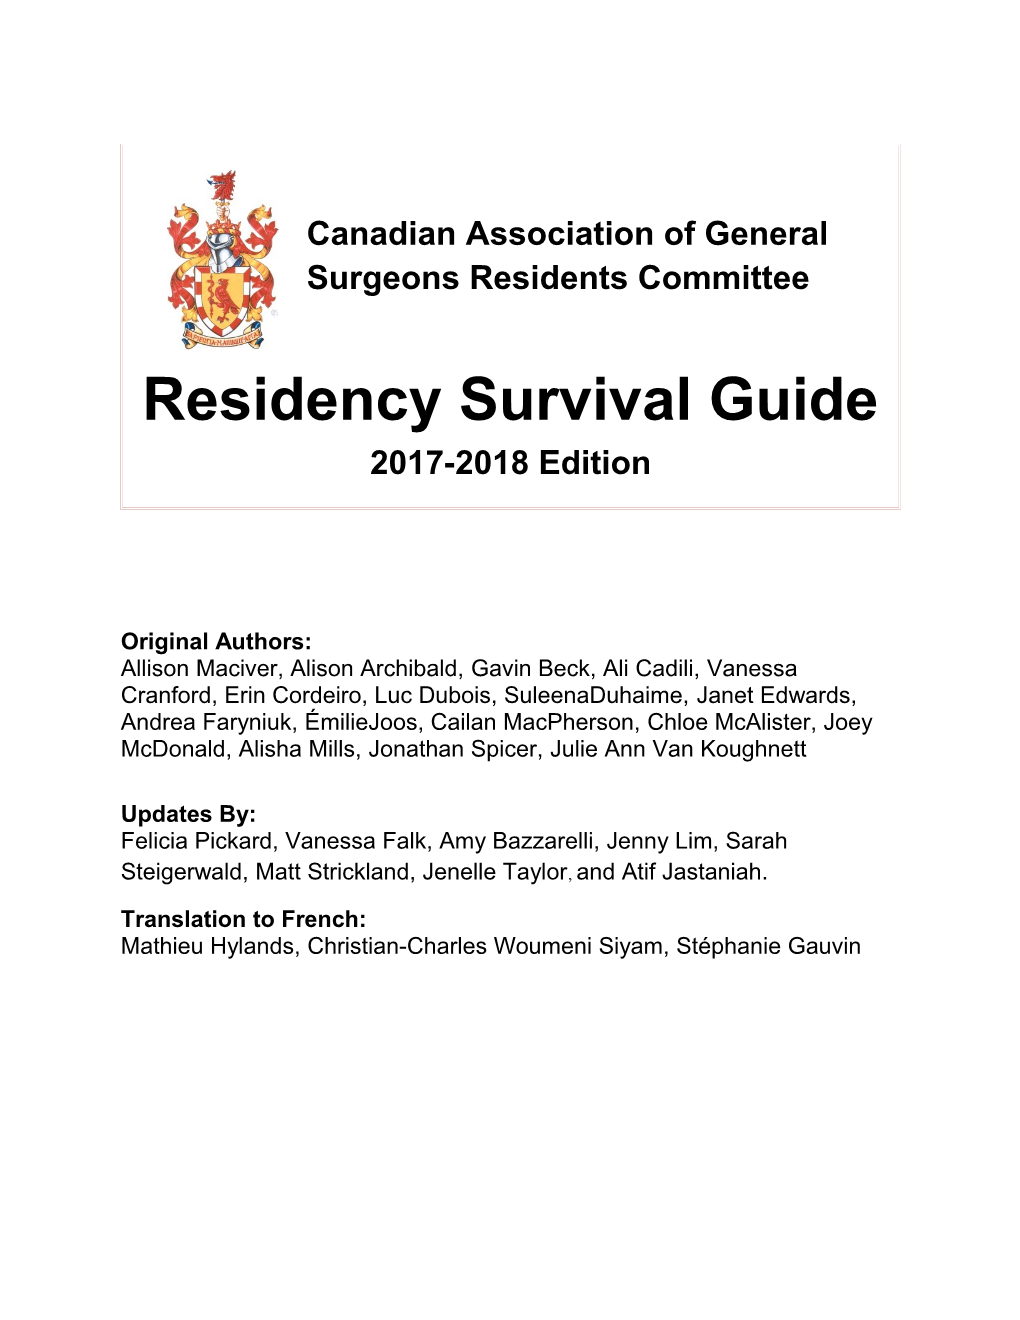 Canadian Association of General Surgeons